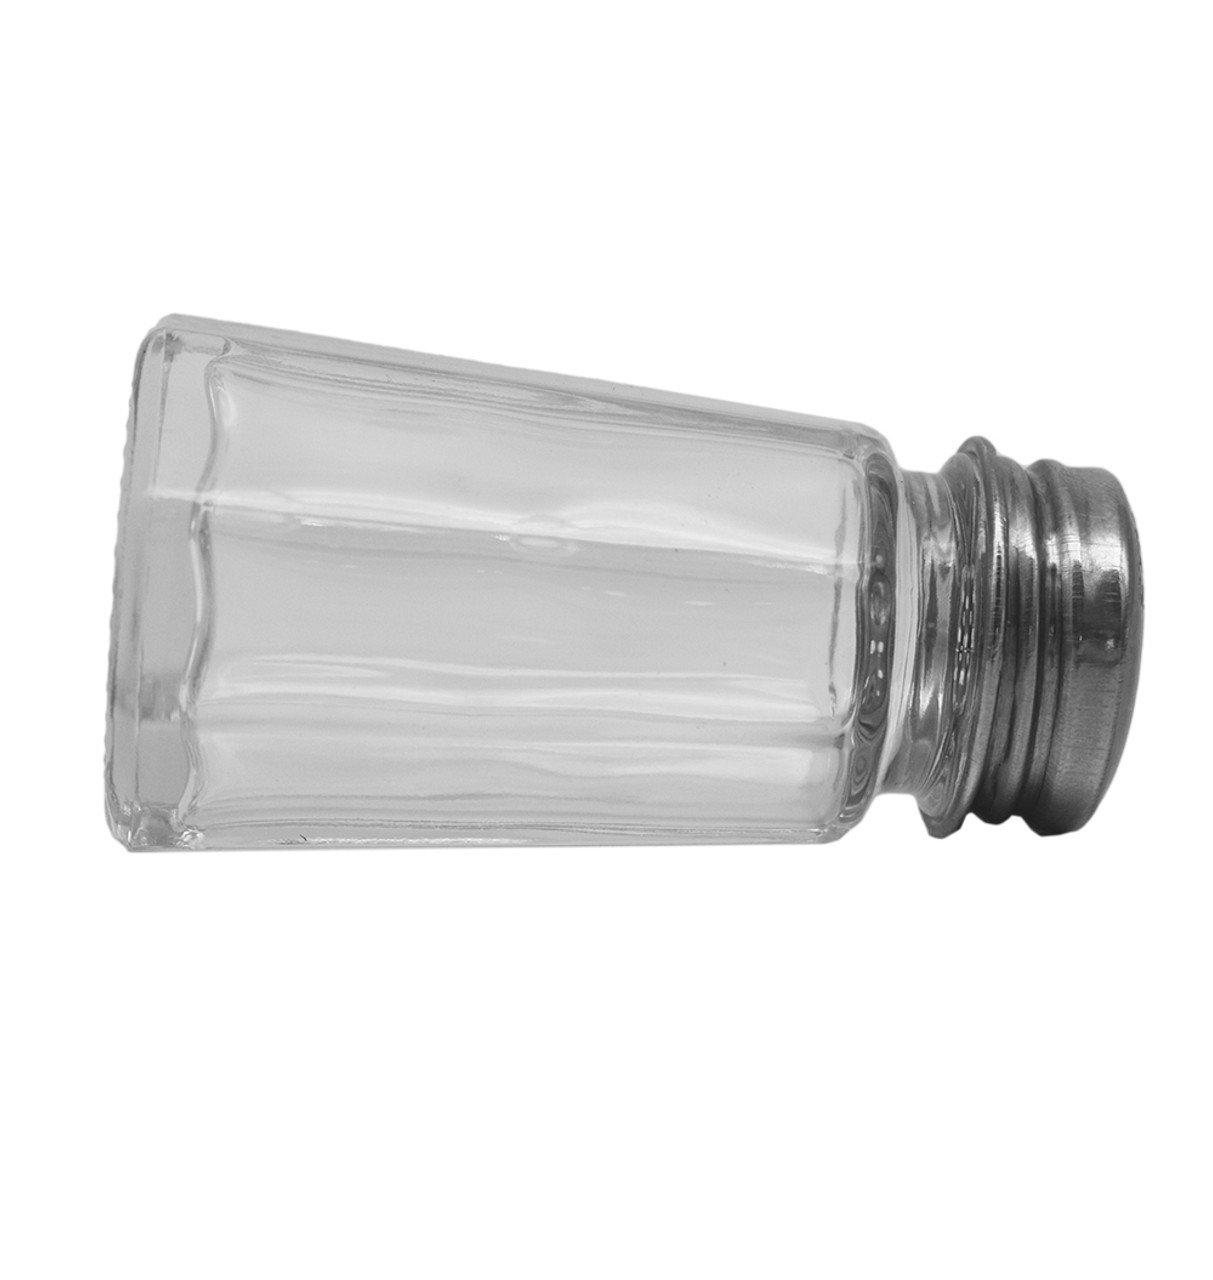 Professional Glass Shaker 550ml (the JAR)– Pure Product Australia